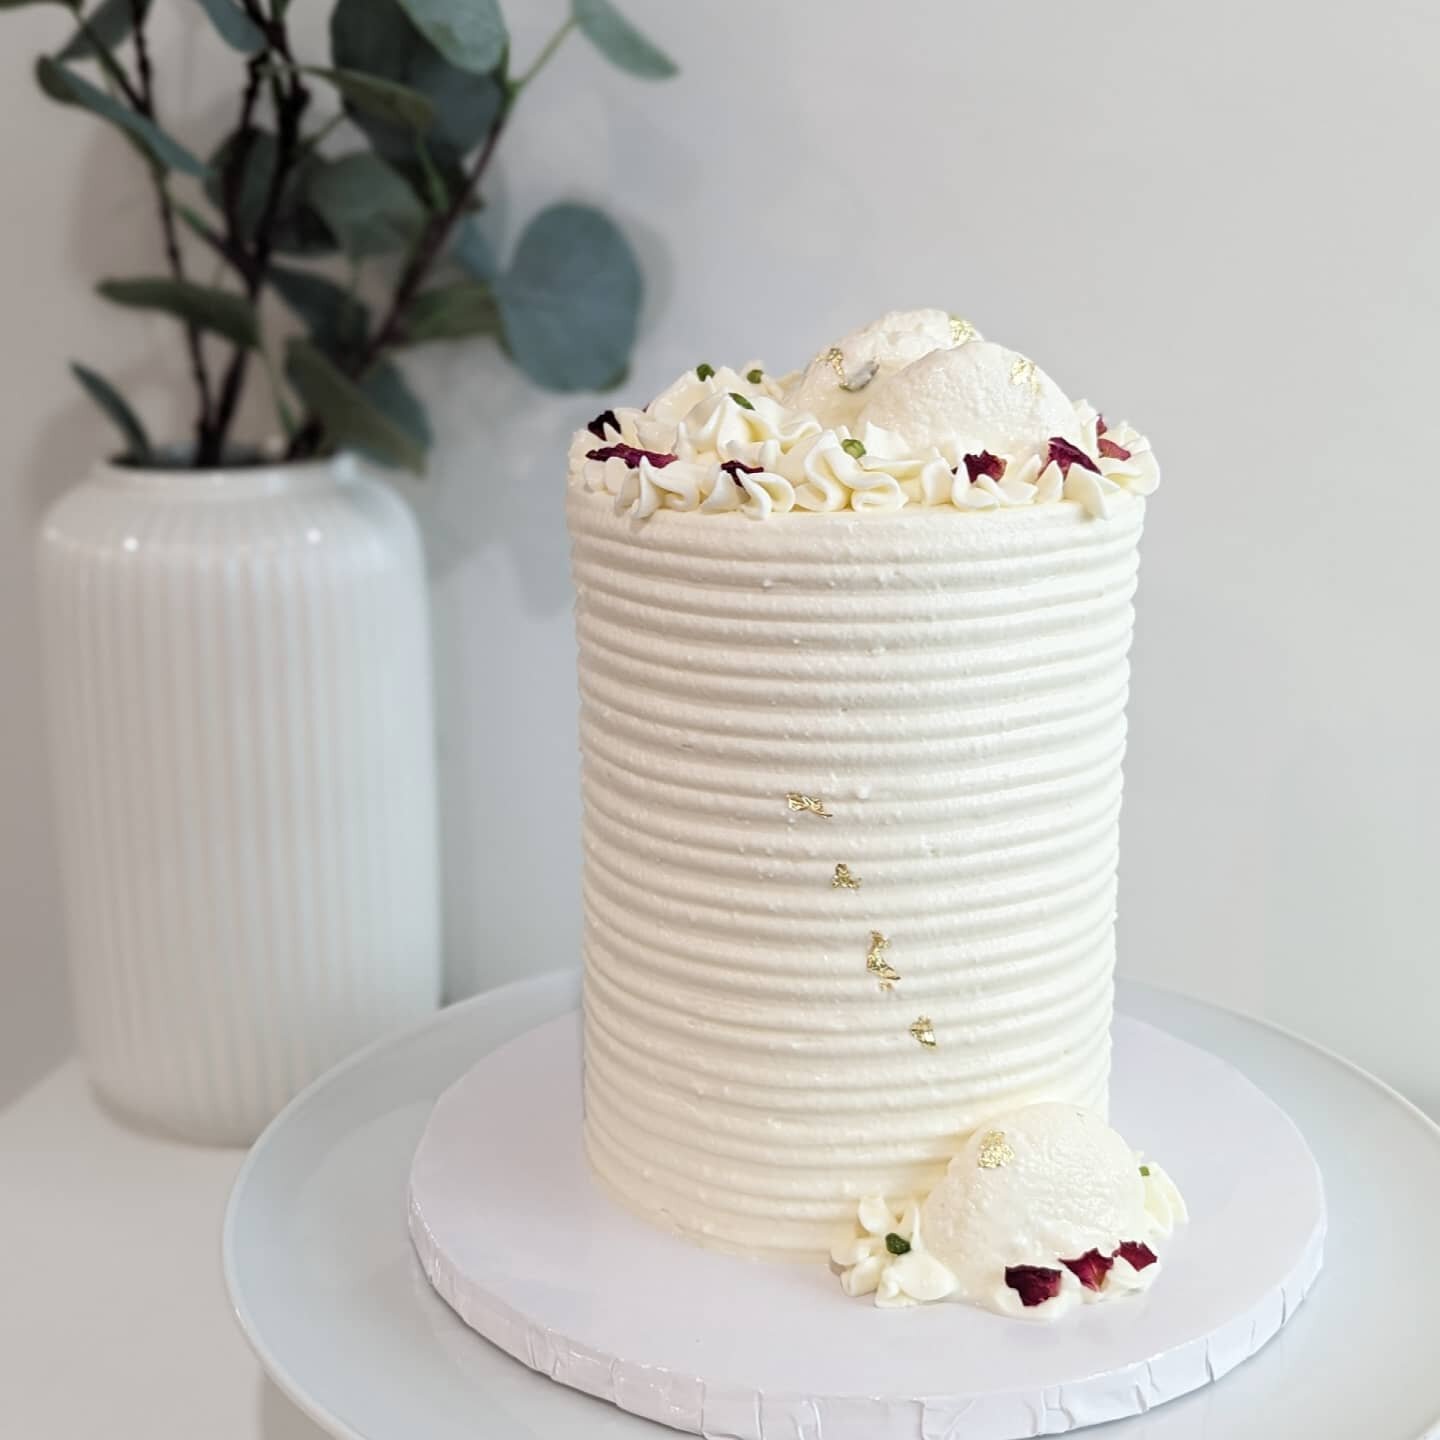 A fluffy white Rasmalai cake to match the snow outside today! ❄️🤍❄️
.
.
.
.
.
.
#rasmalai #rasmalaicake #cakelove #cakeinspiration #indiancake #dessert #tallcake #4inchcake #whippedcream #cakeideas #cakephotography #cakeshoot #cakedecorating #cake #